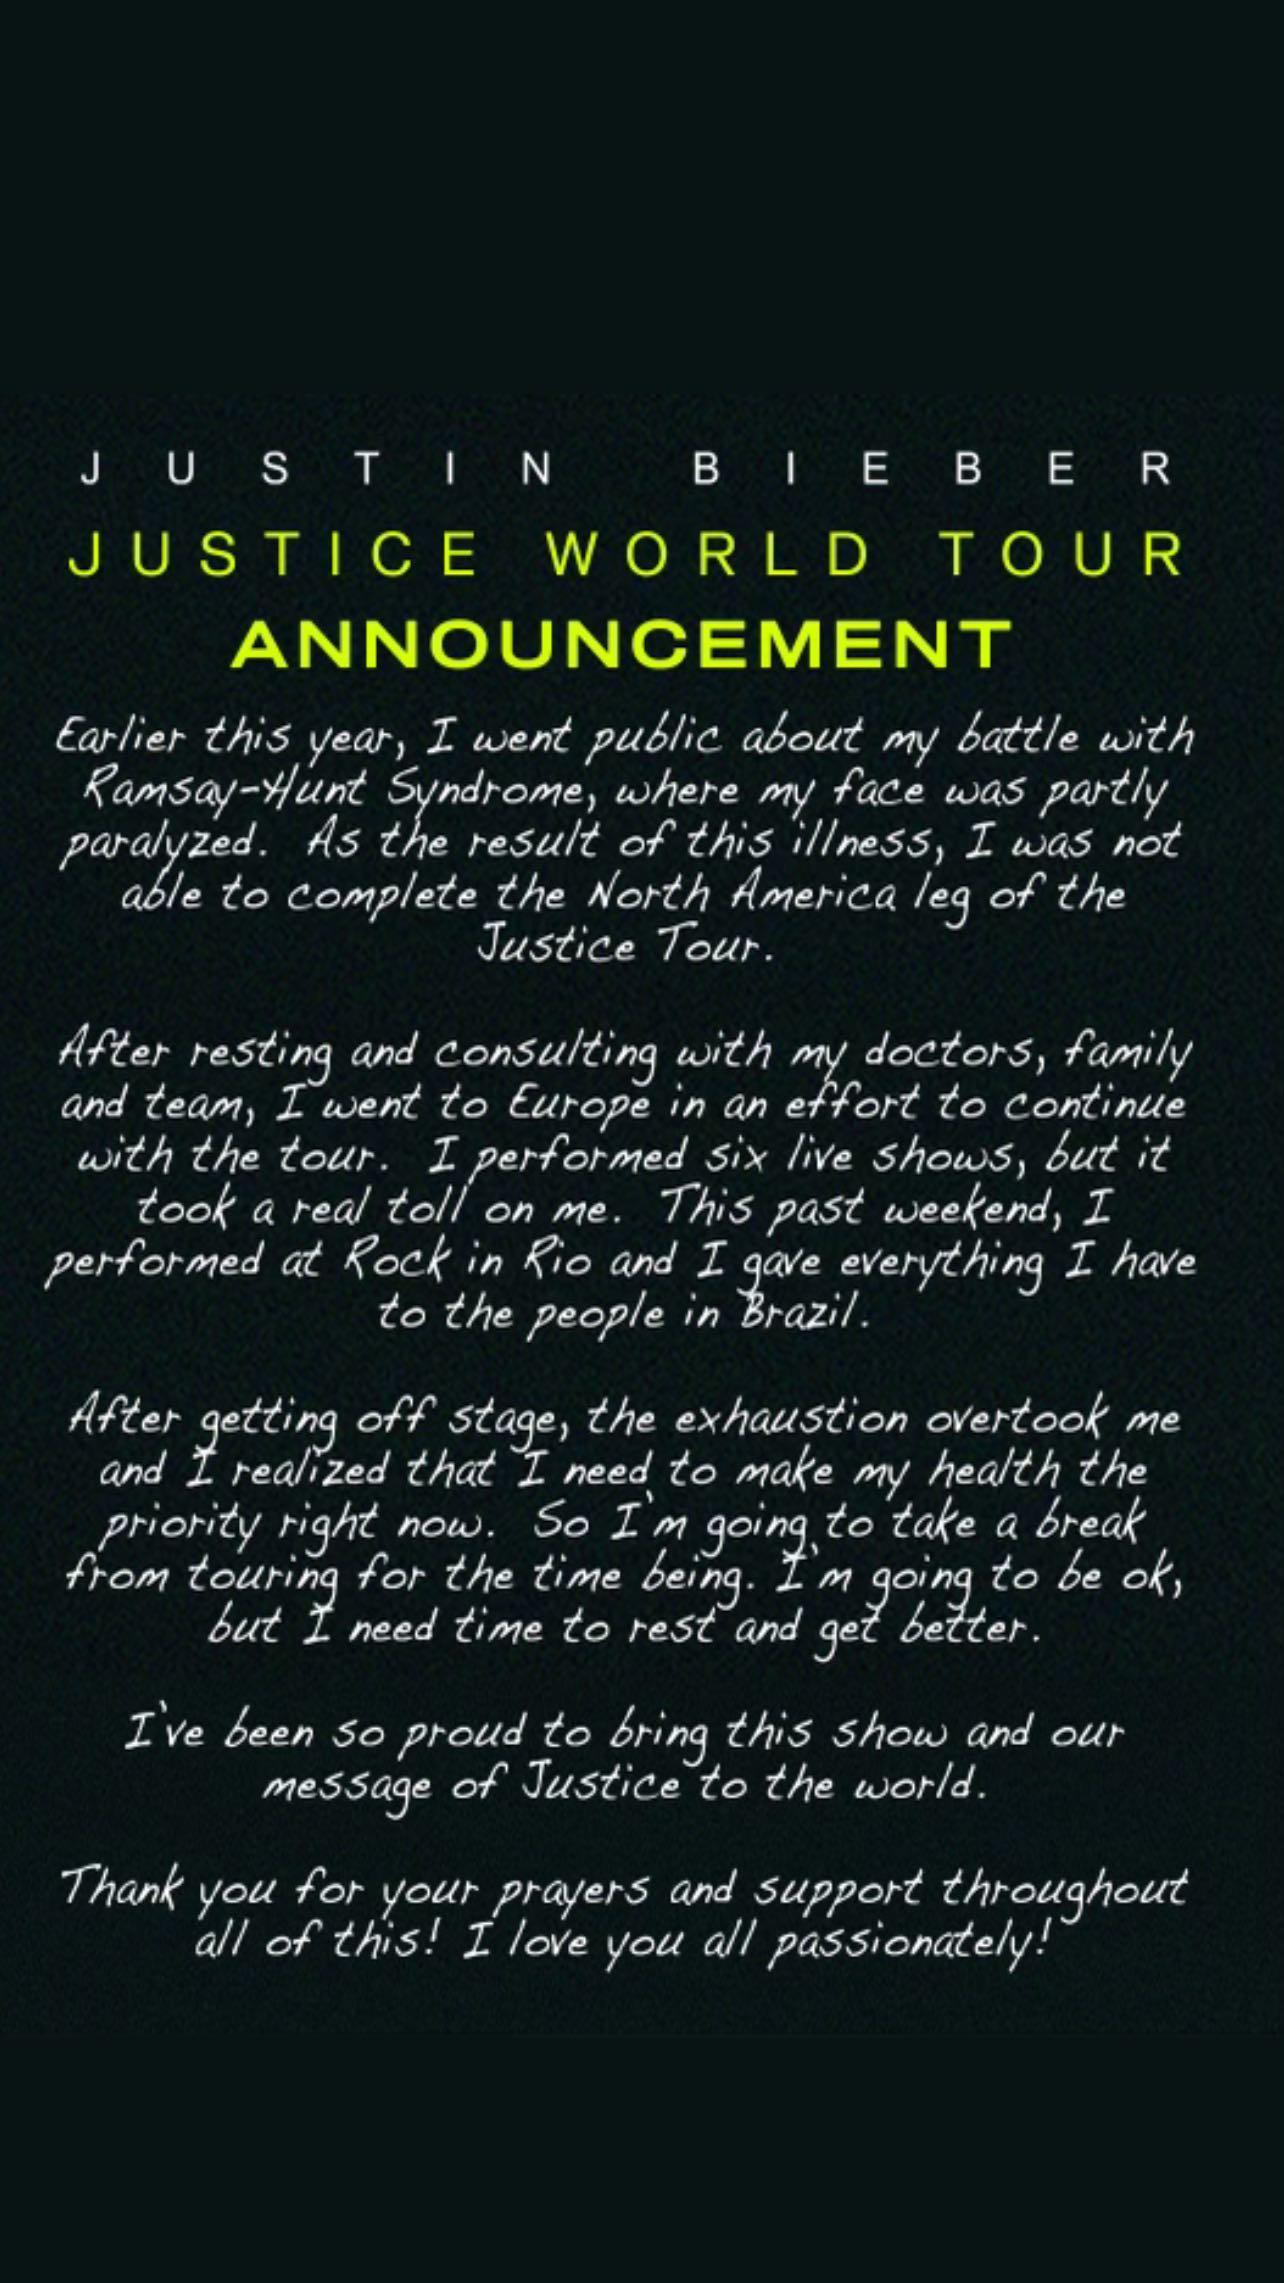 Justin Bieber postpones Justice World Tour